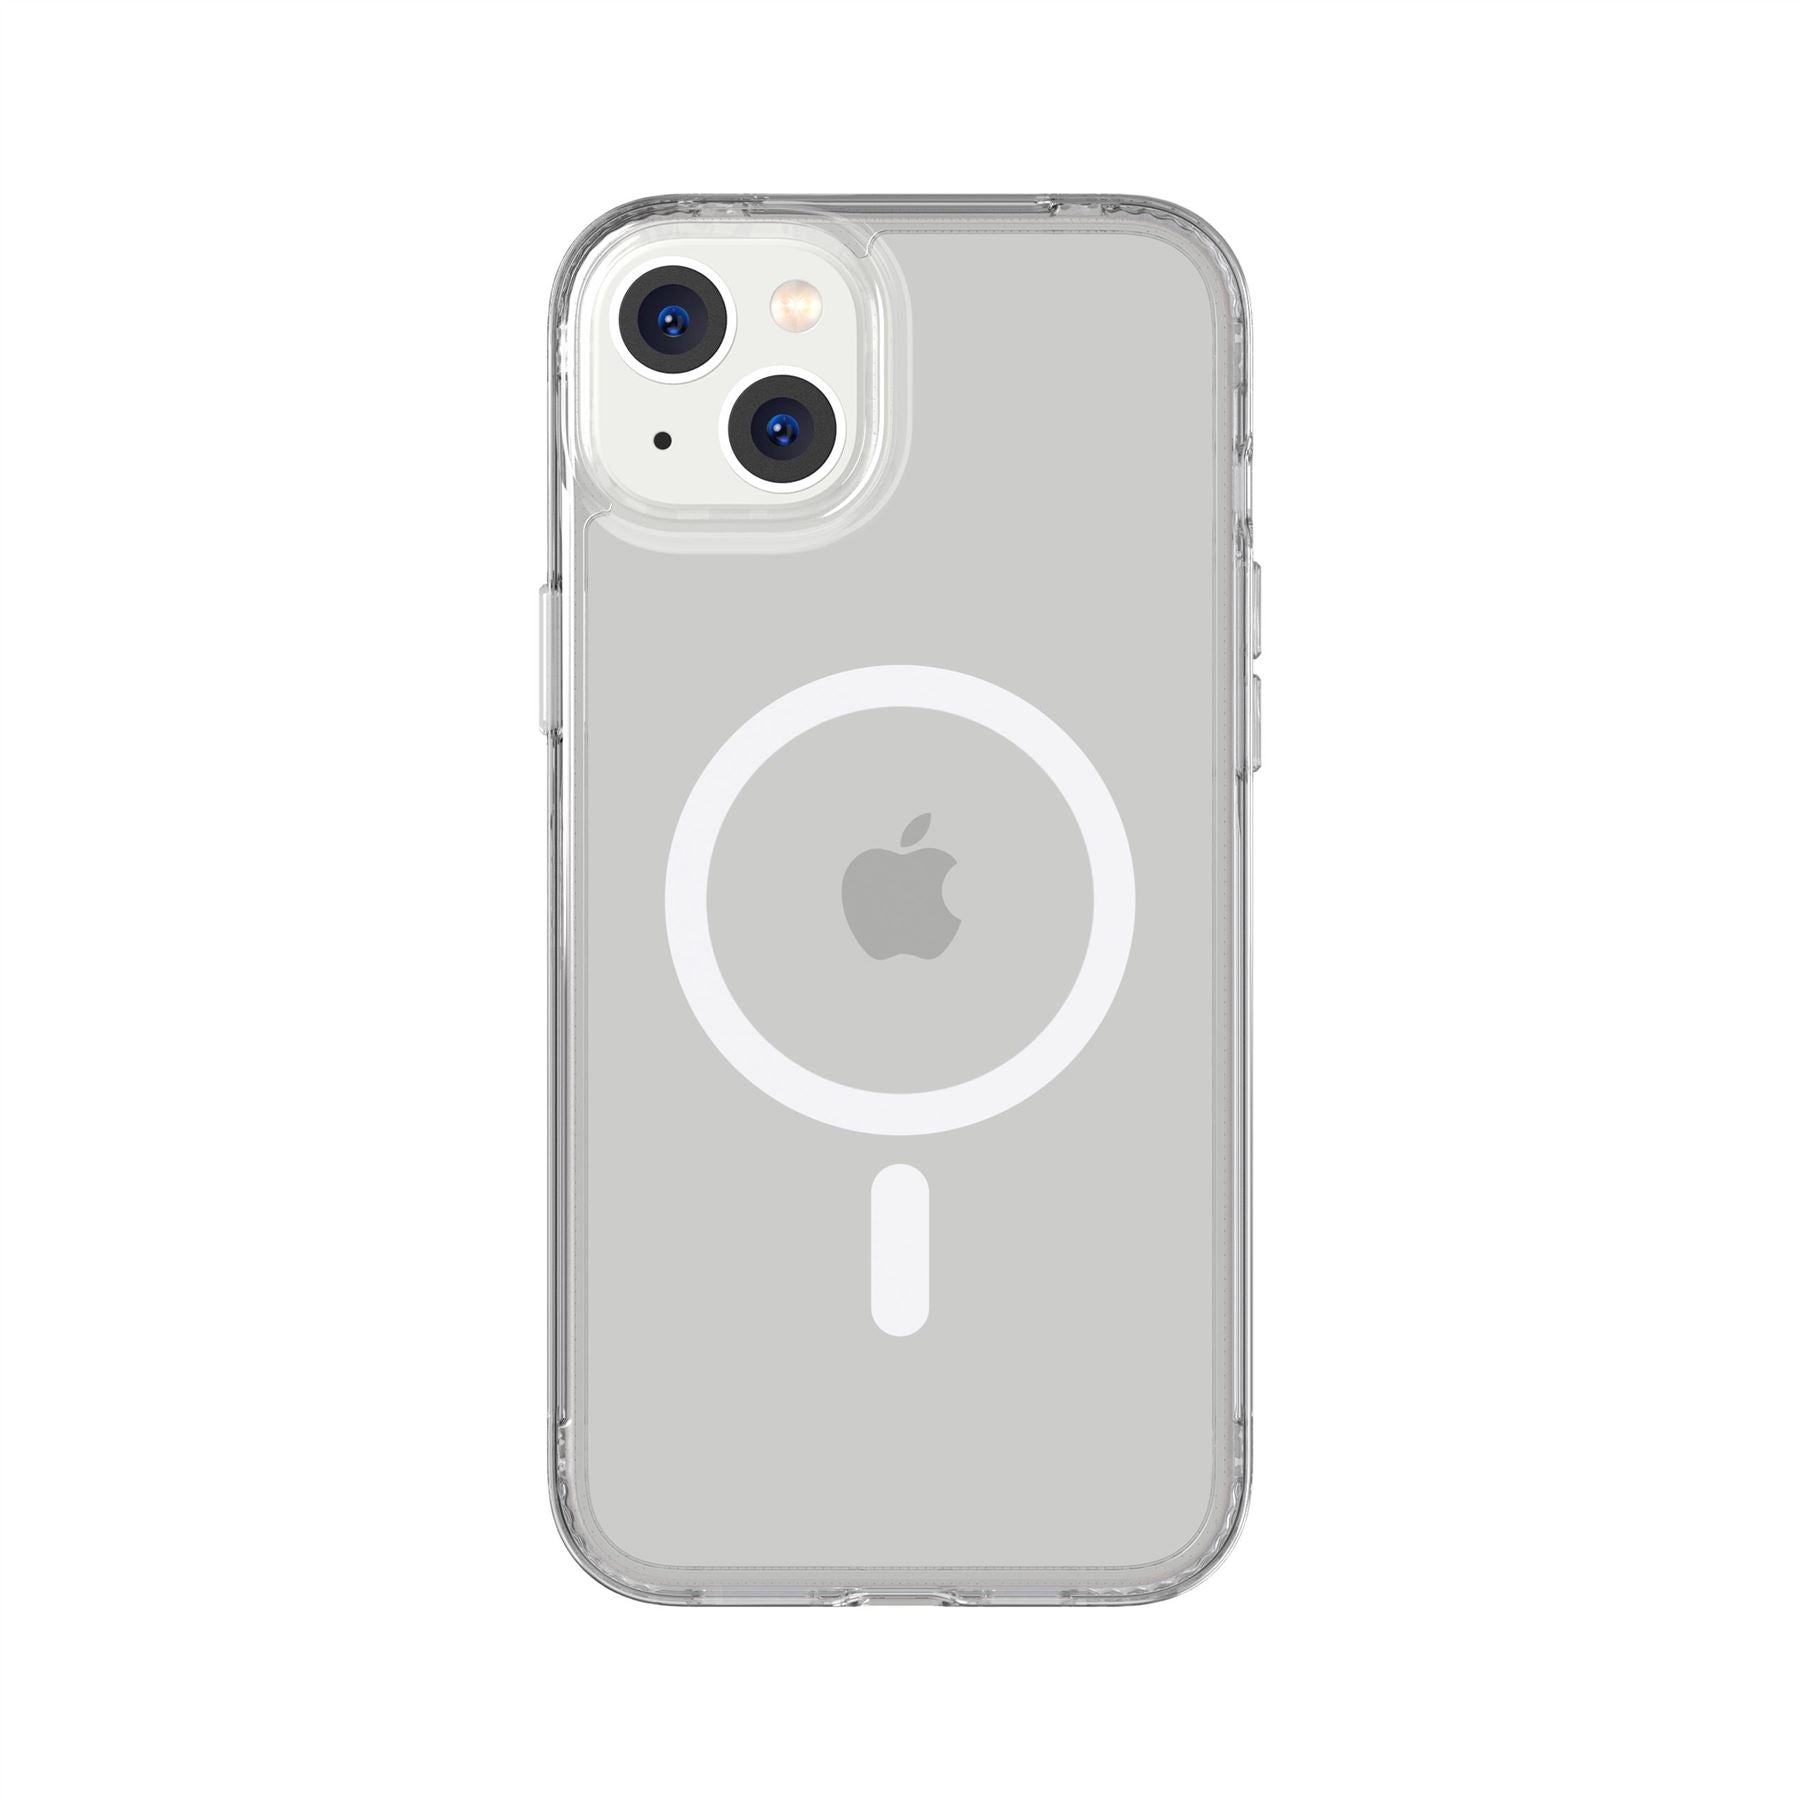 Apple iPhone 12 Mini Review: Compact, Powerful & A Breath Of Fresh Air